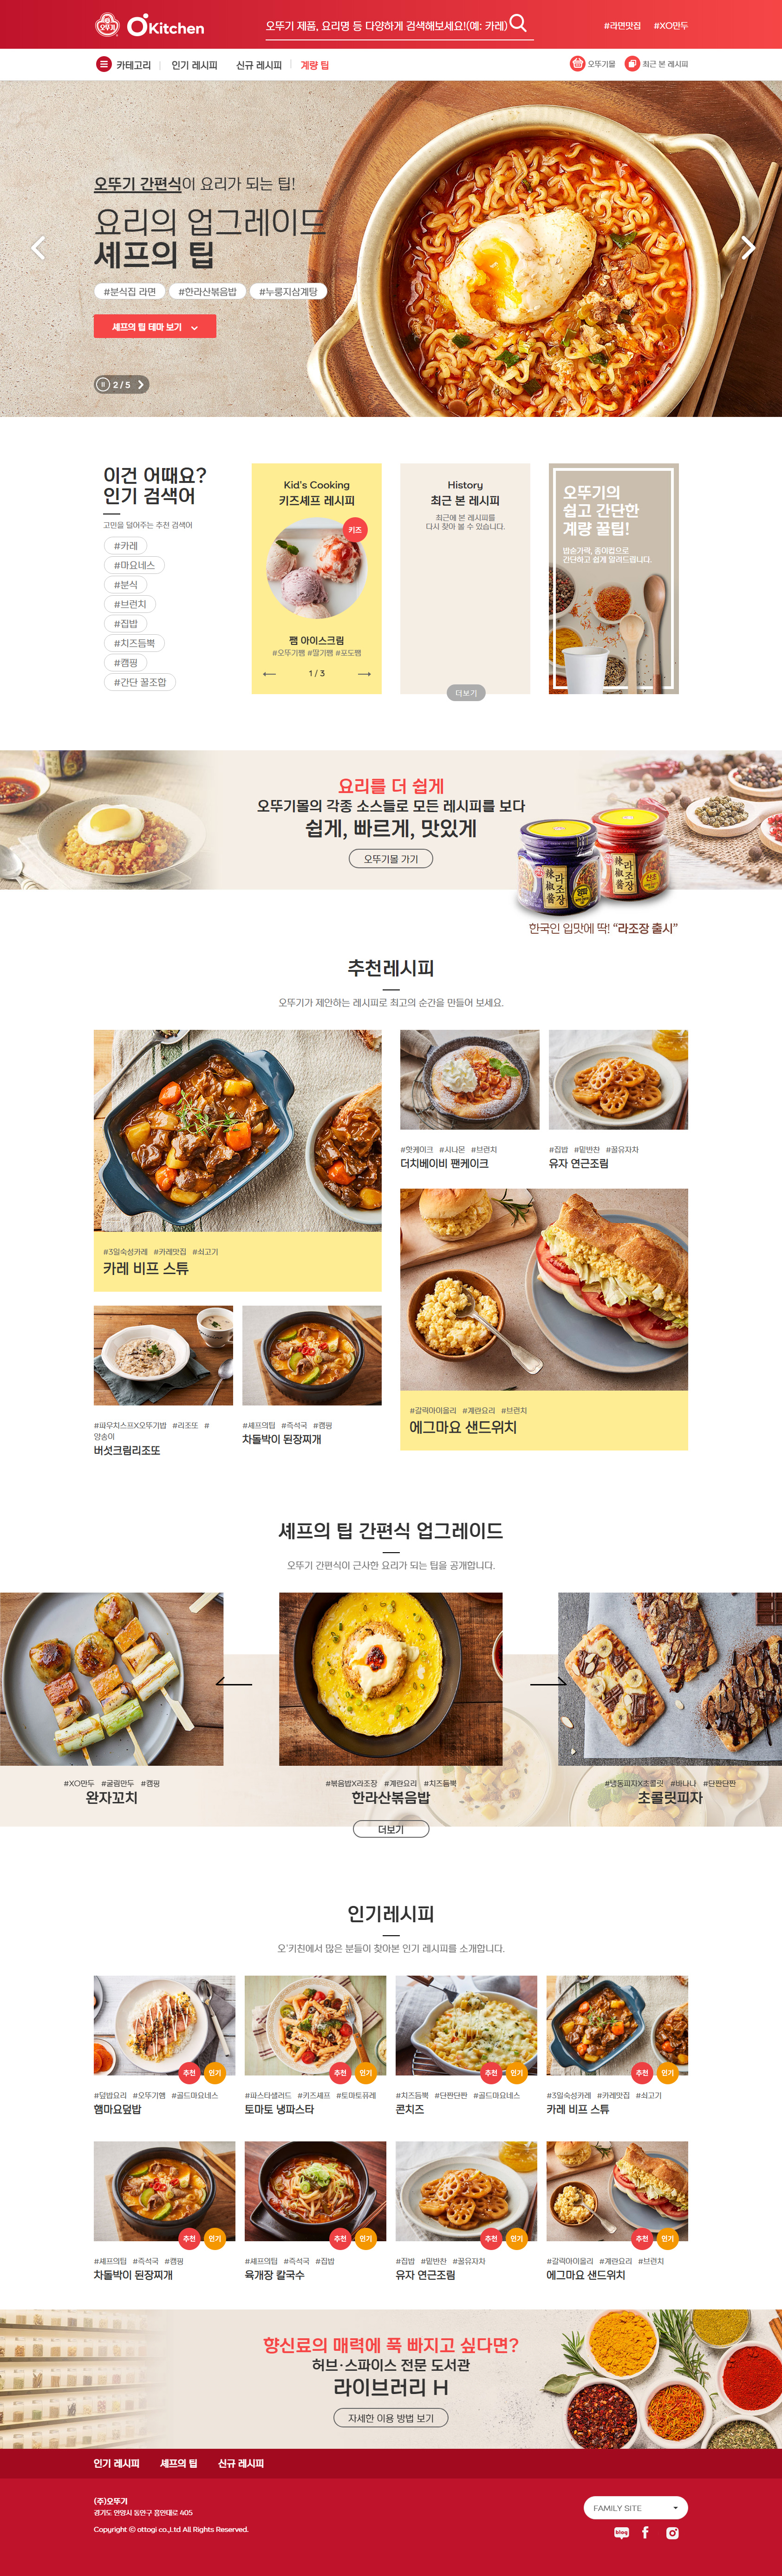 韩国okitchen便利食品网站设计